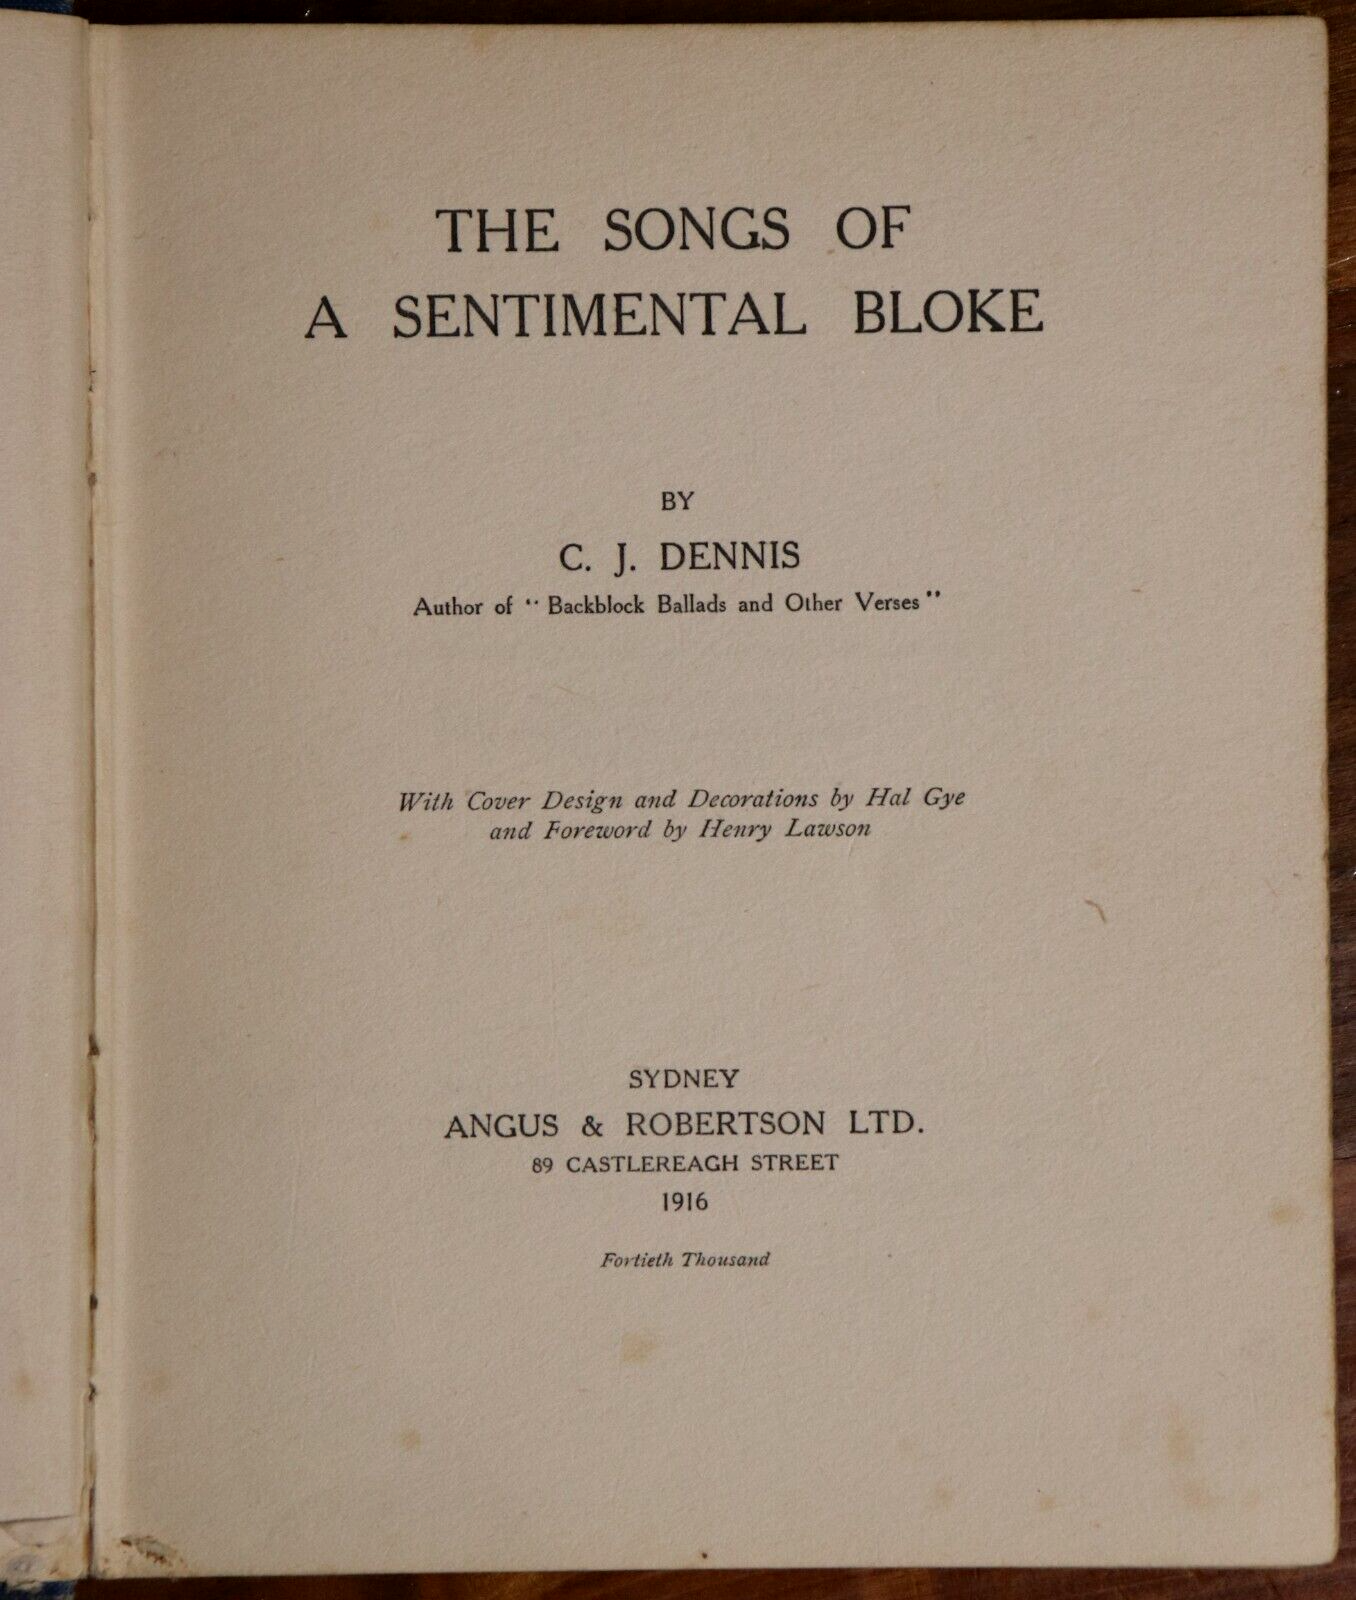 The Sentimental Bloke by CJ Dennis - 1916 - Classic Australian Literature Book - 0